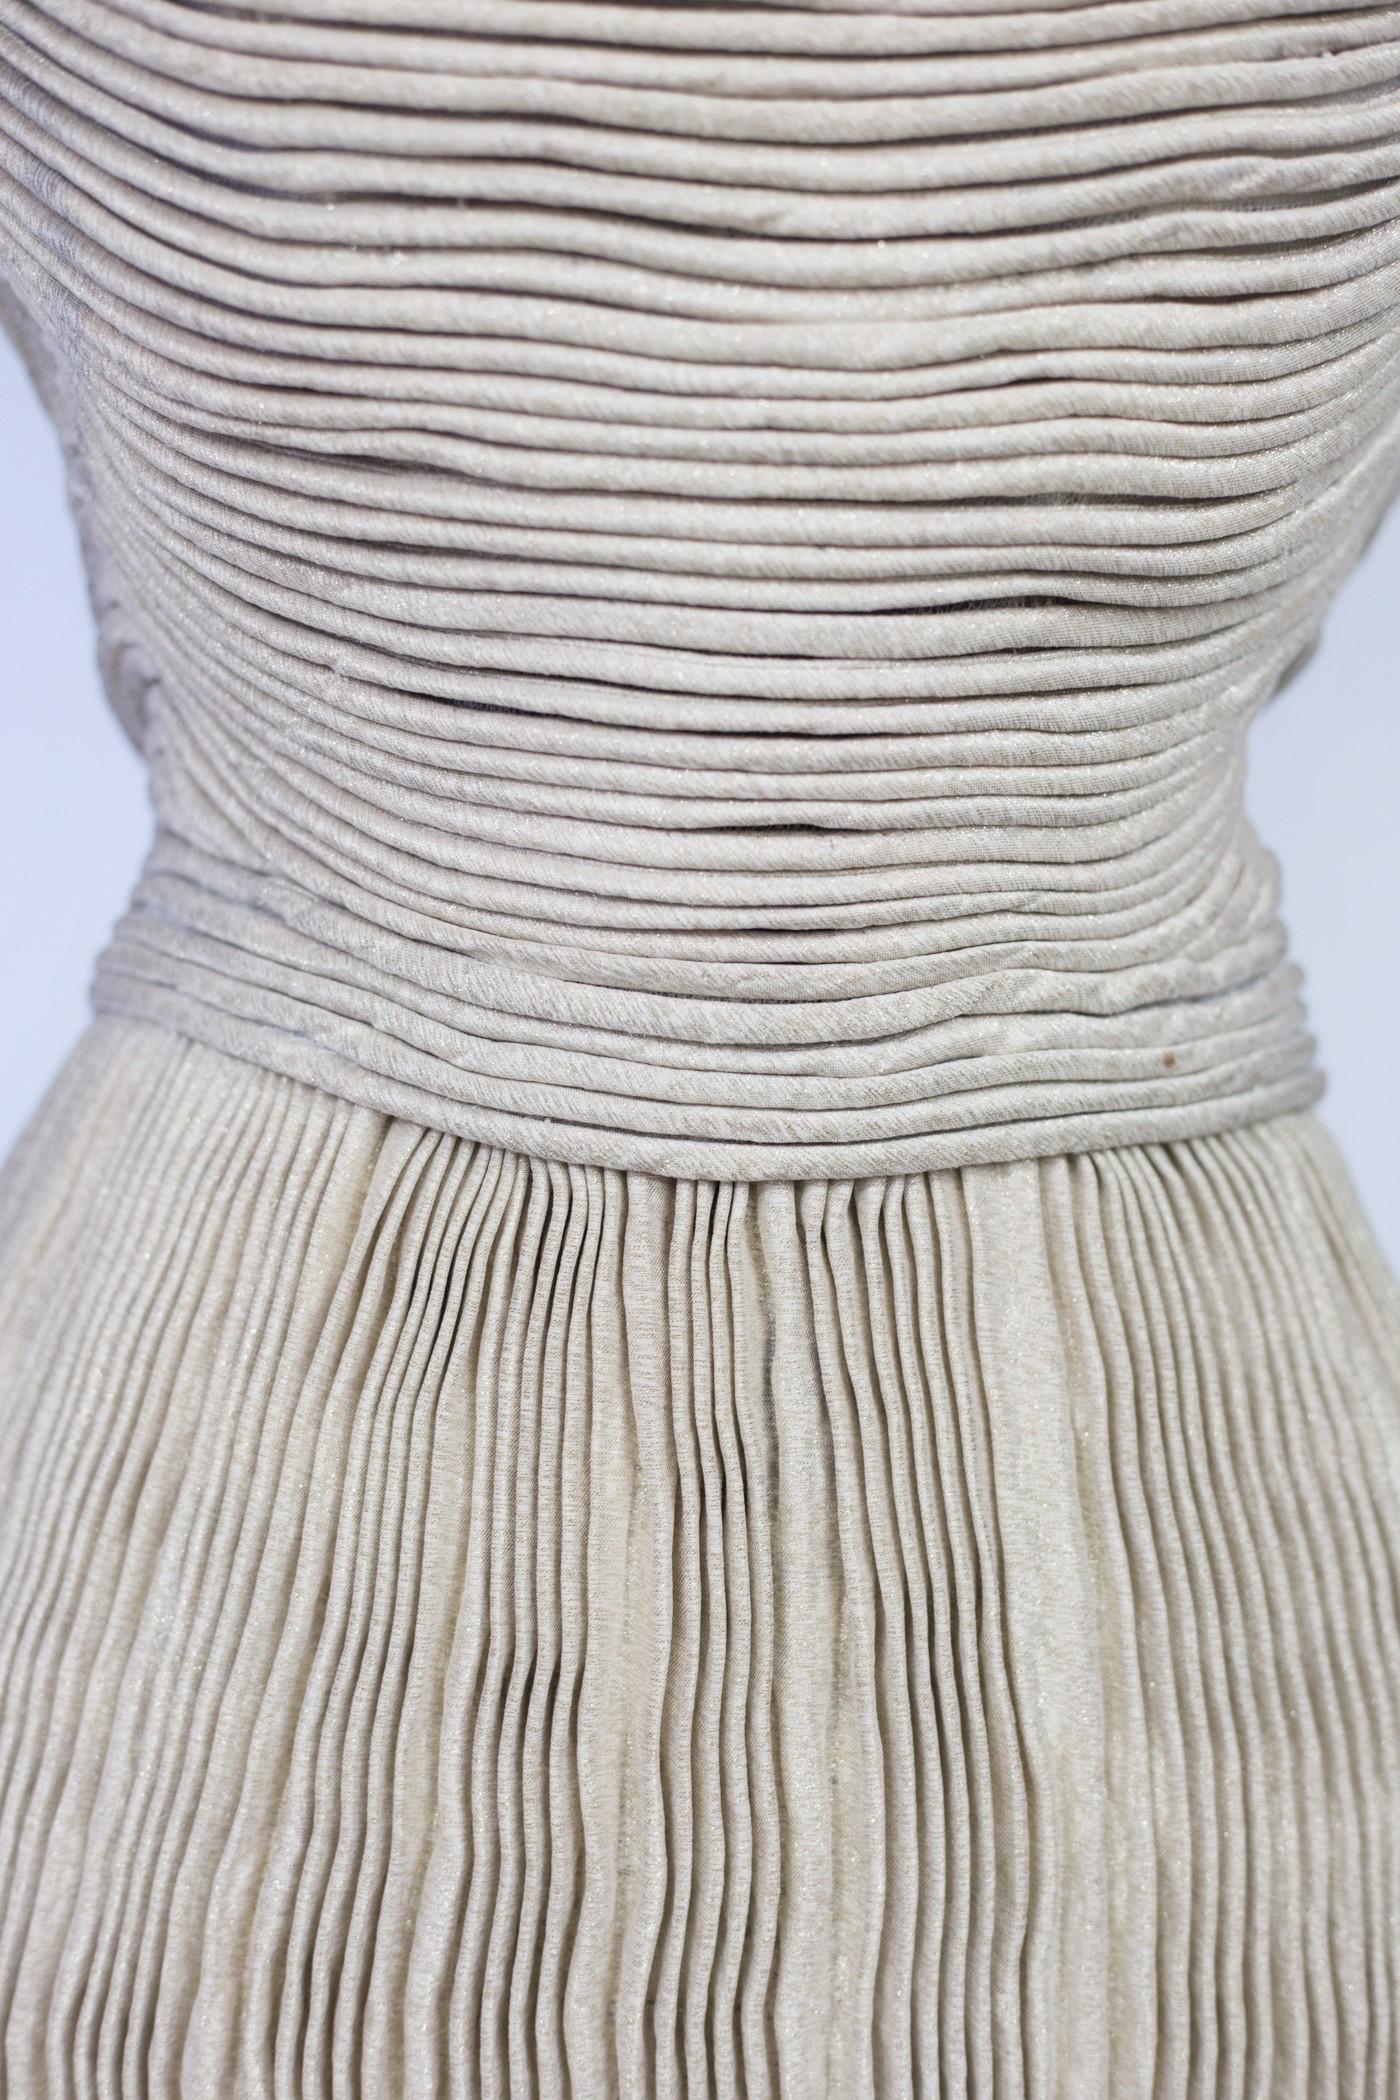 A Silver Lamé Evening Dress by Lucile Manguin - France Haute Couture Circa 1940 9